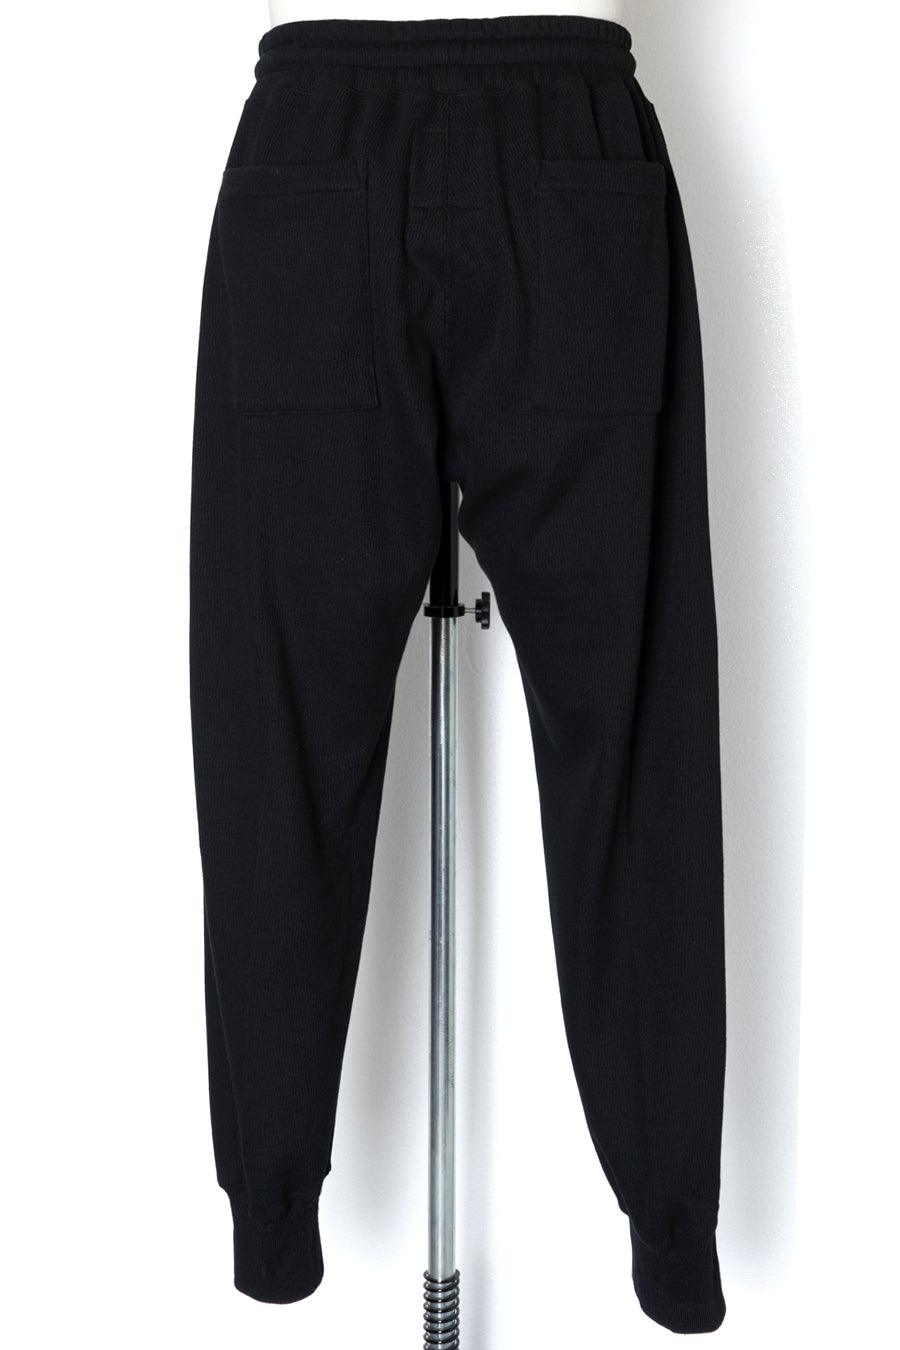 Men's Fleece Lined Pants Waterproof Softshell Thermal Zip Pockets